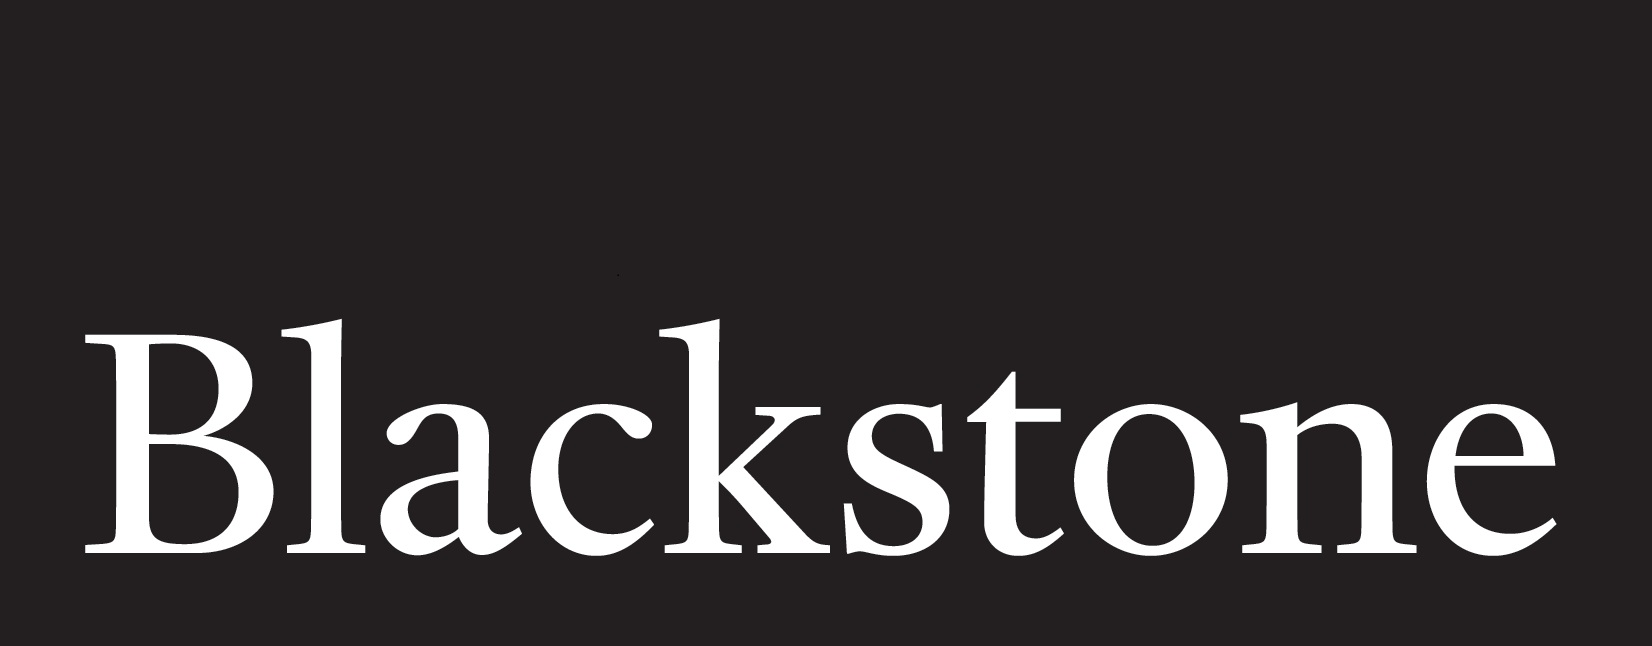 Blackstone-PRESS-QUALITY-6312.jpg